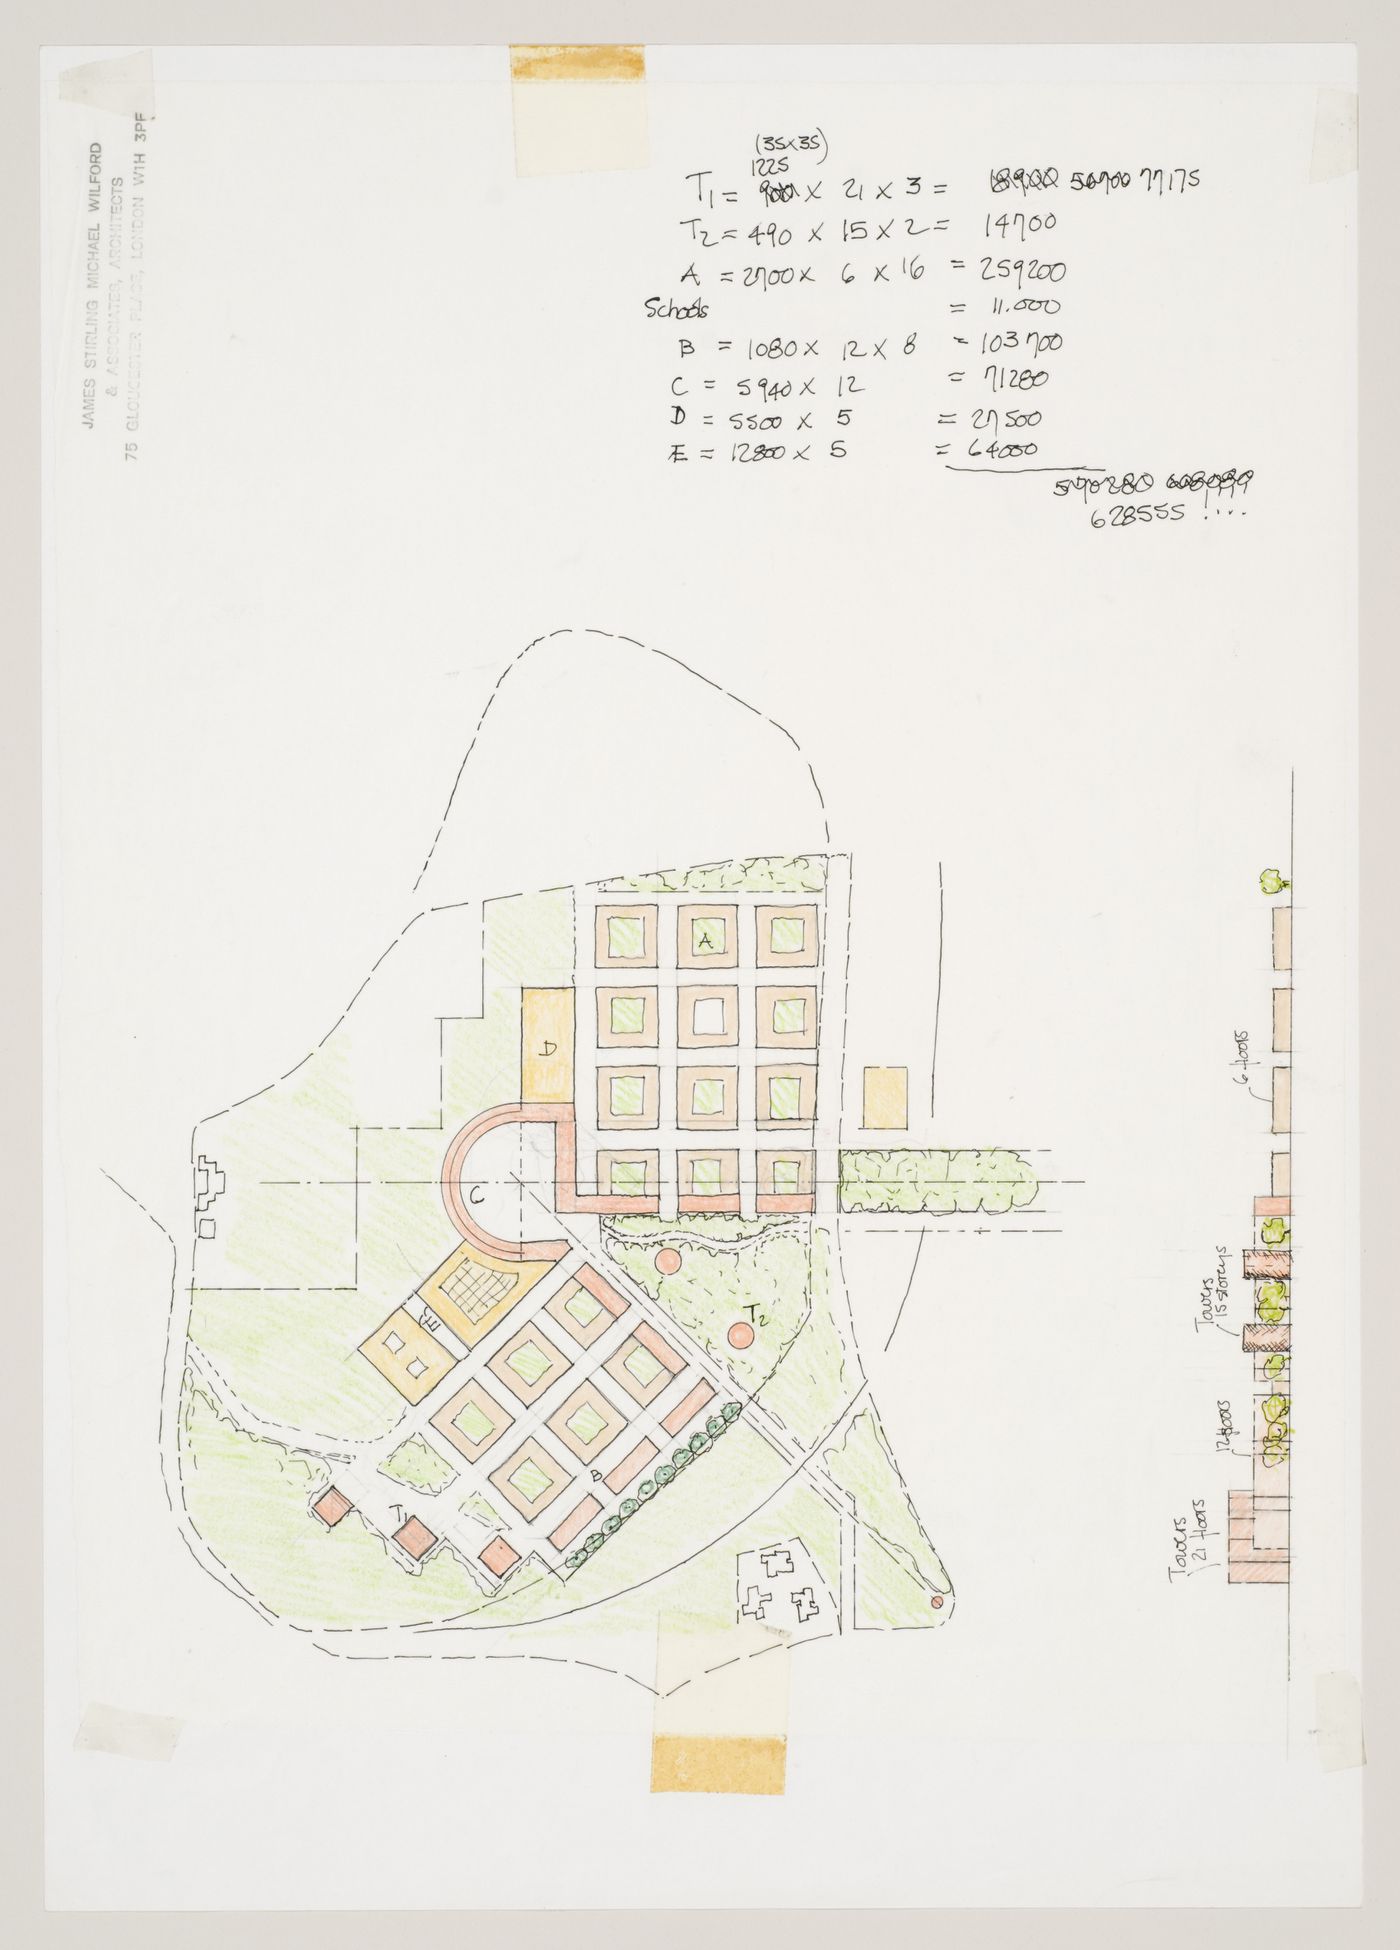 New Town Centre, Caselecchio di Reno, Italy: plan and elevation